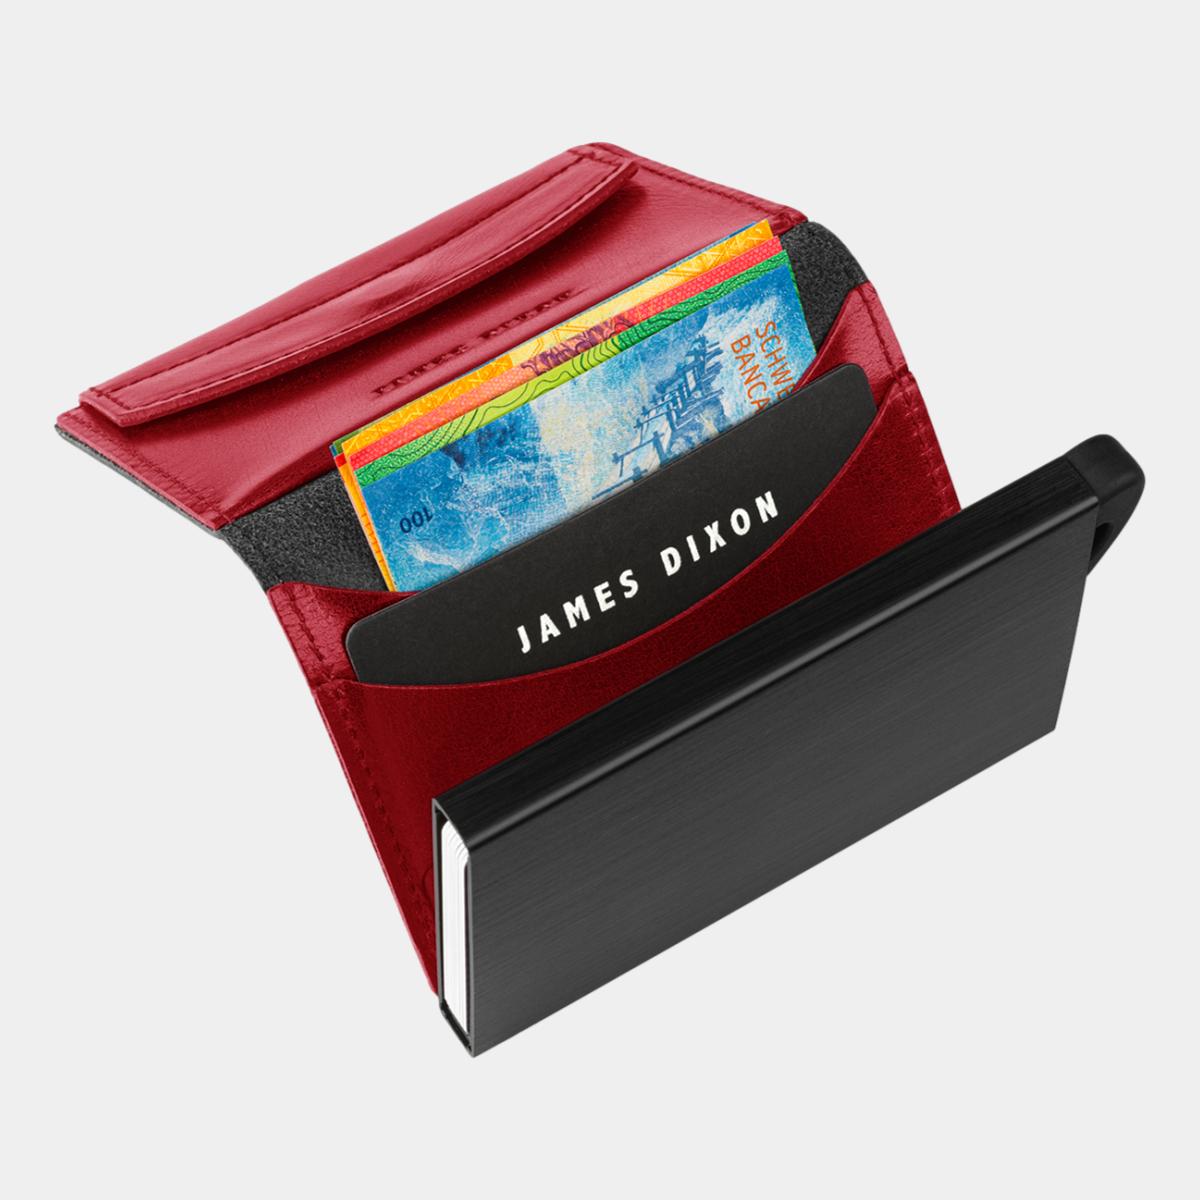 jd0223 james dixon puro classic black devil red coin pocket wallet notes